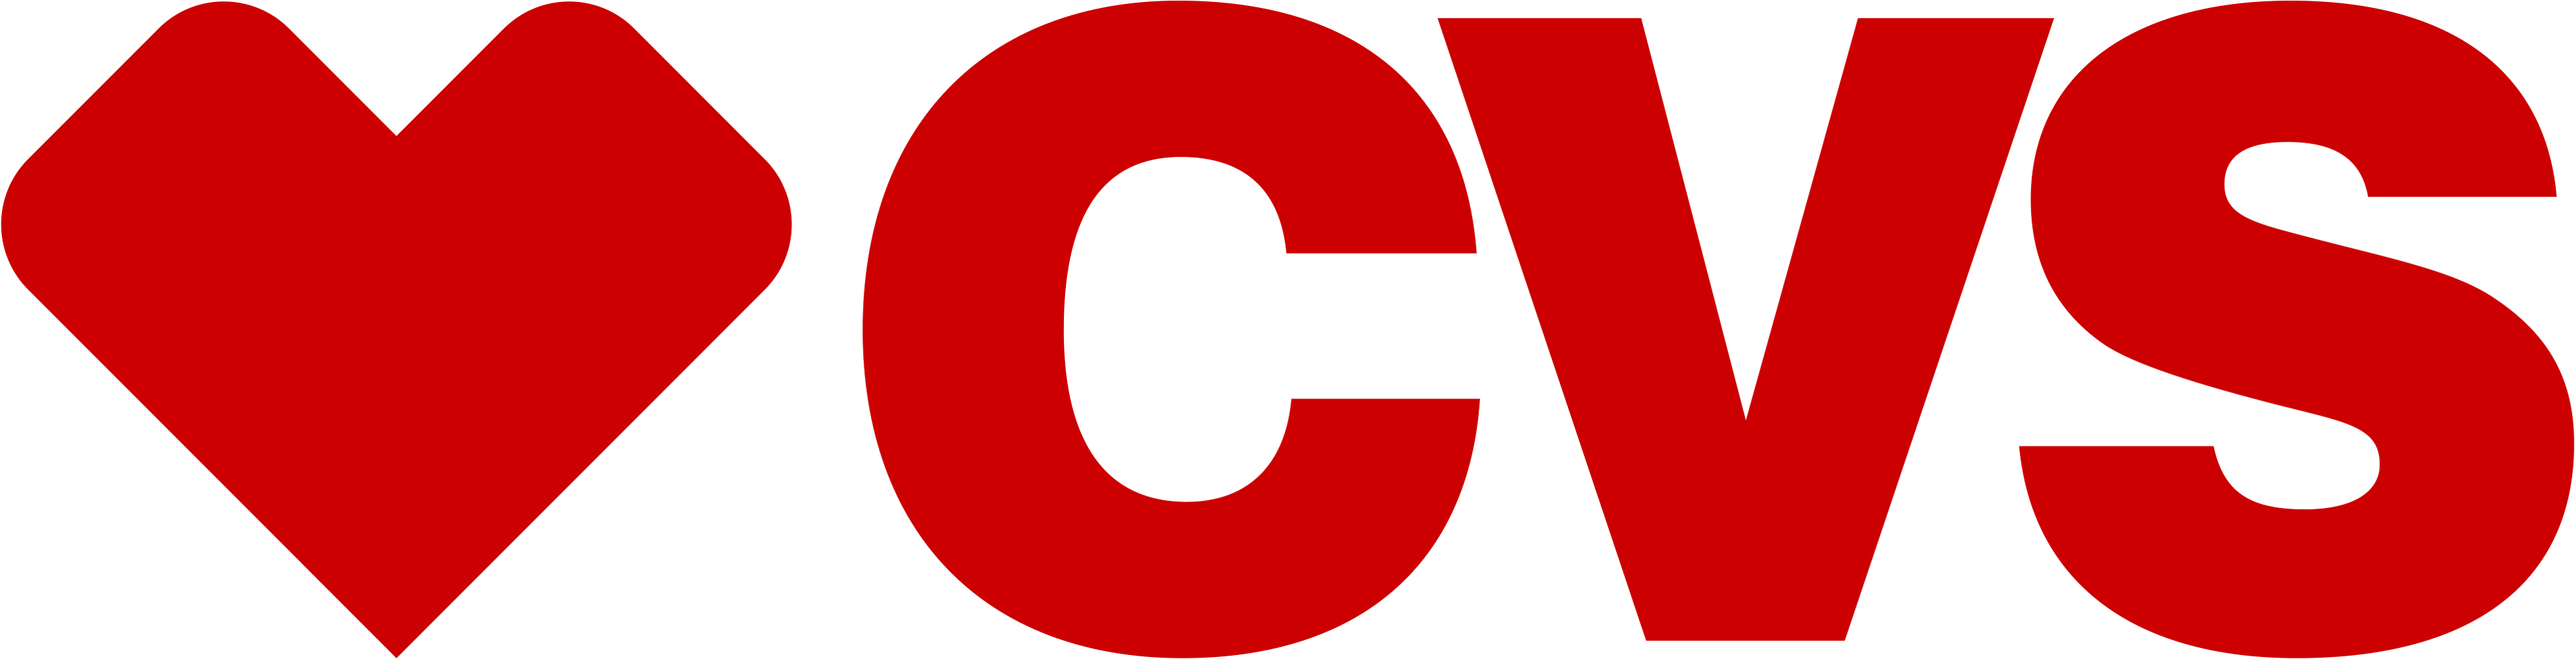 Regions - Cvs Y Mas Logo (4096x1056)